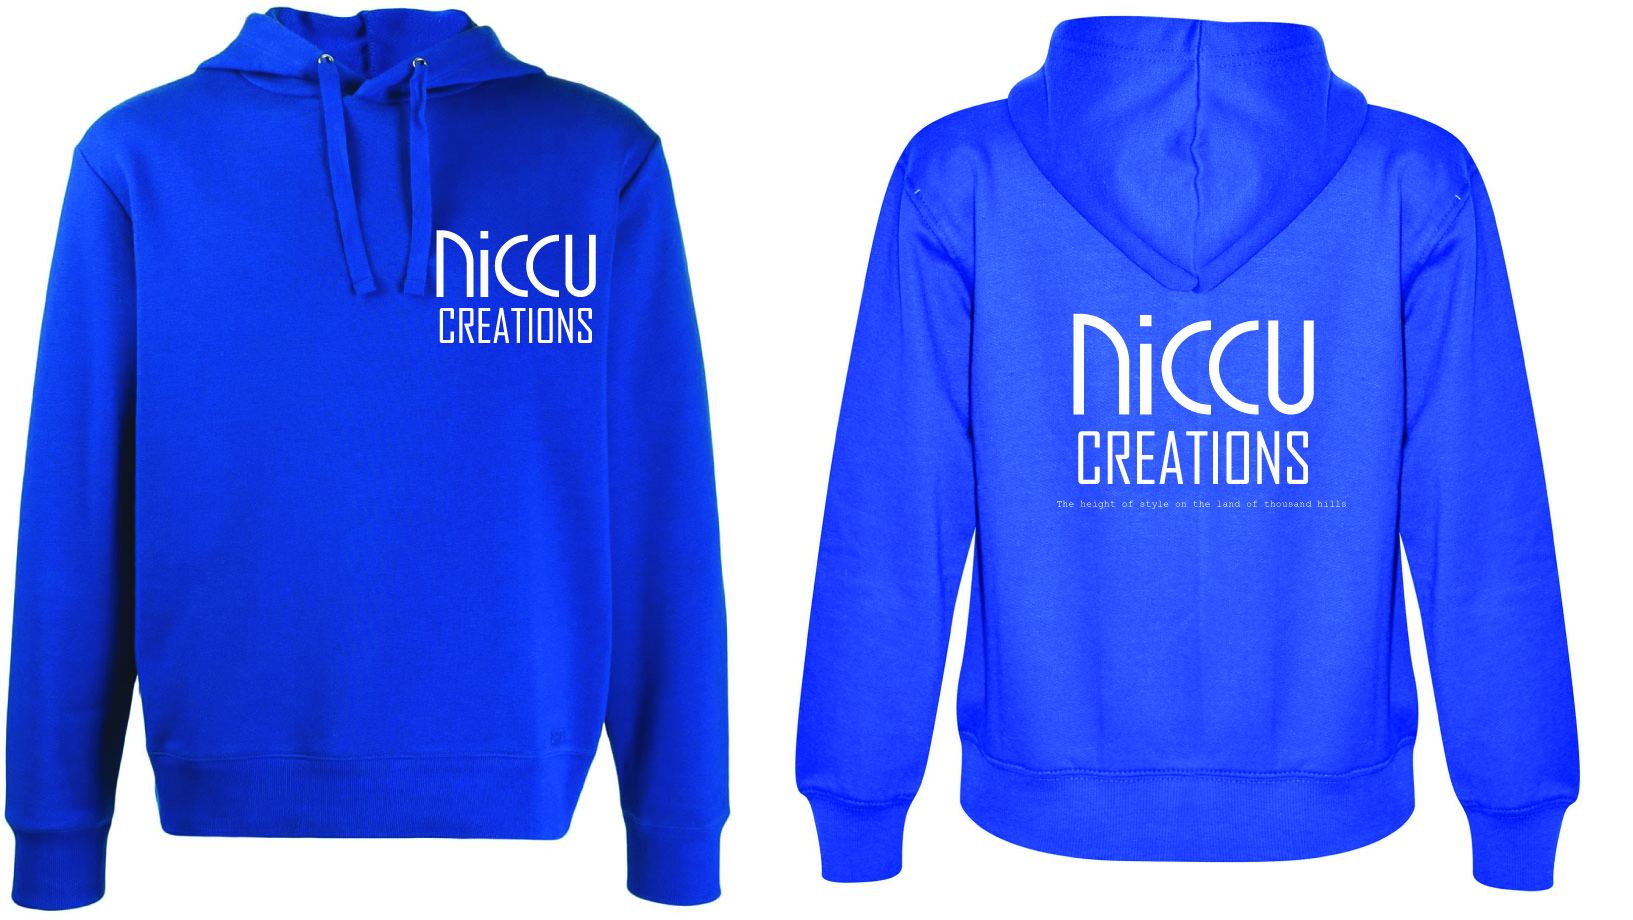 Niccu Creations Ltd